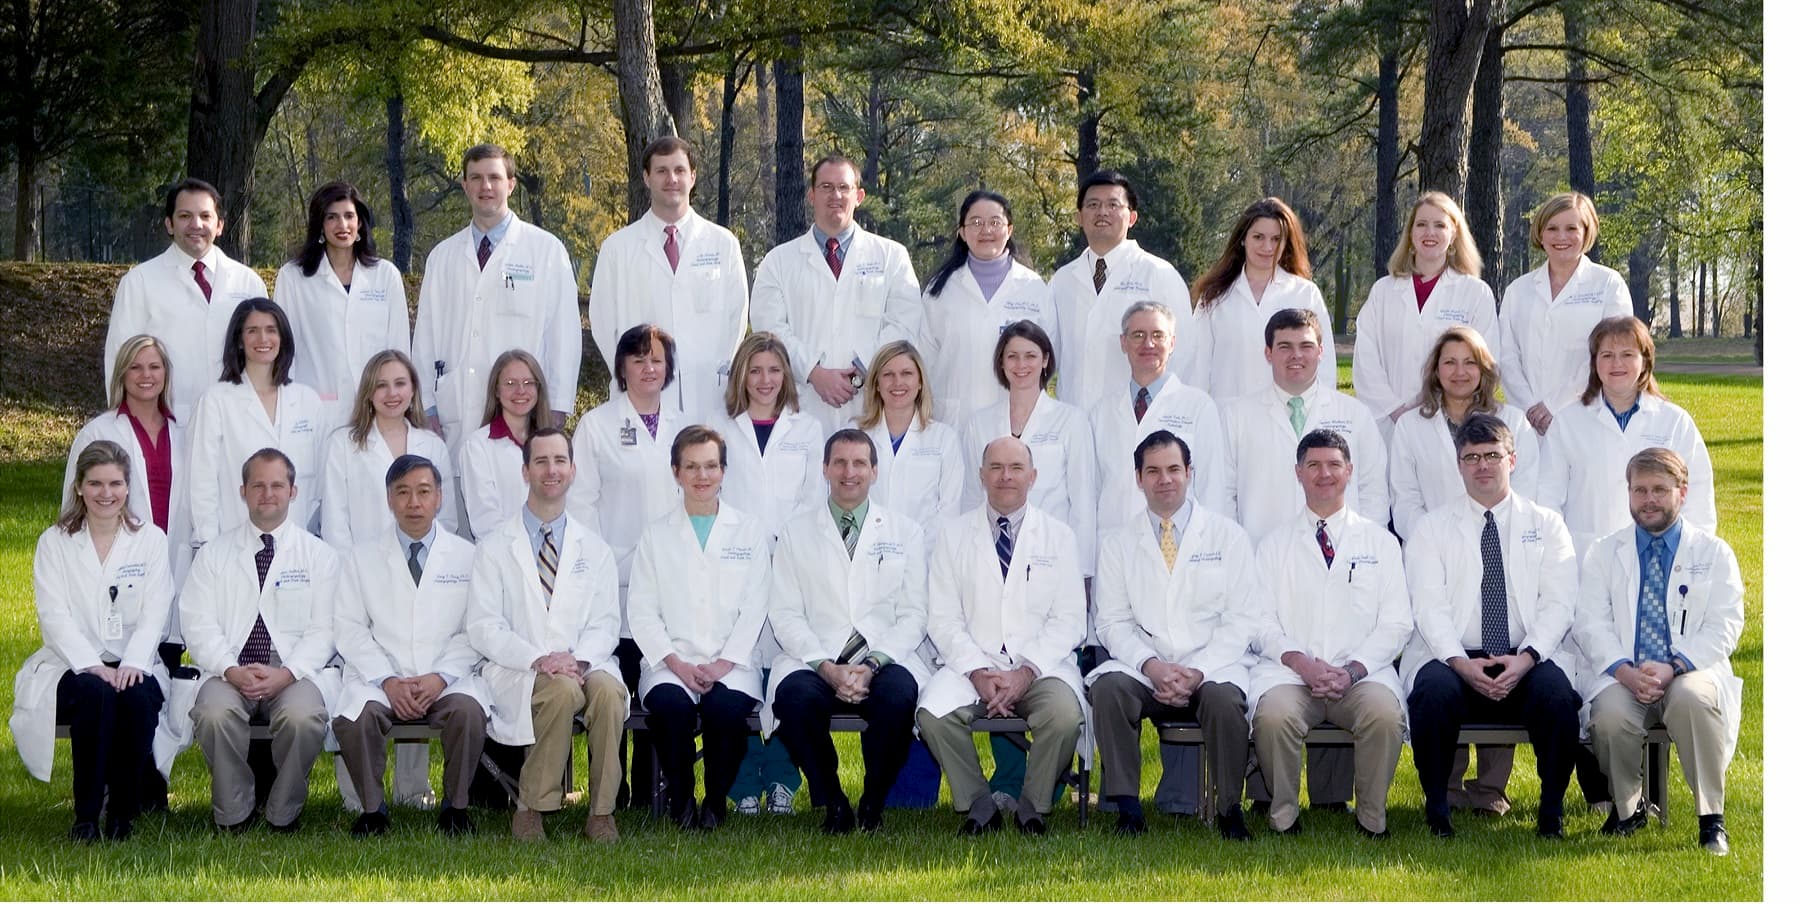 2006 Annual Department Photo